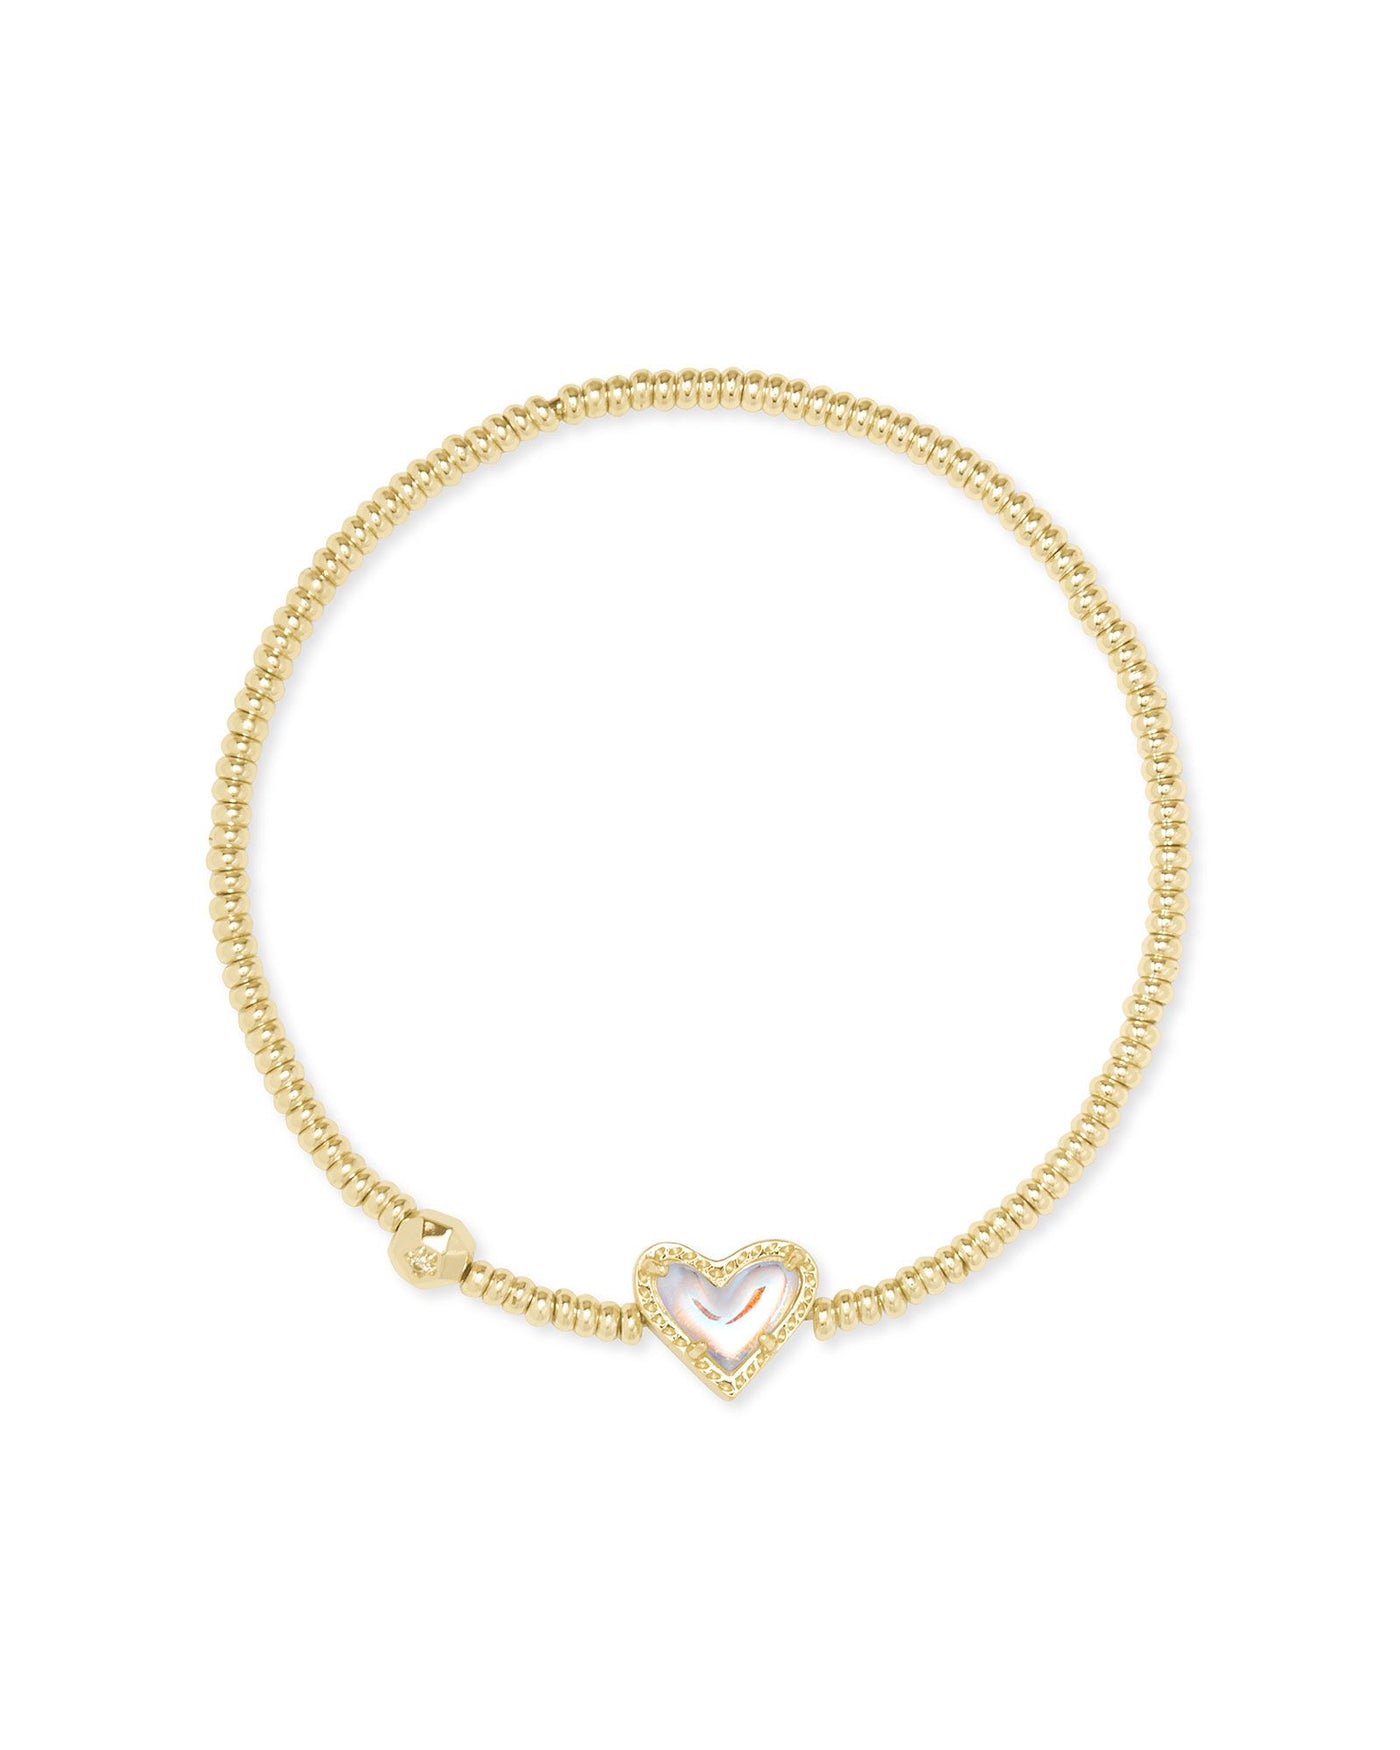 Kendra Scott Ari Heart Stretch Bracelet in Gold Dichroic Glass on white background.